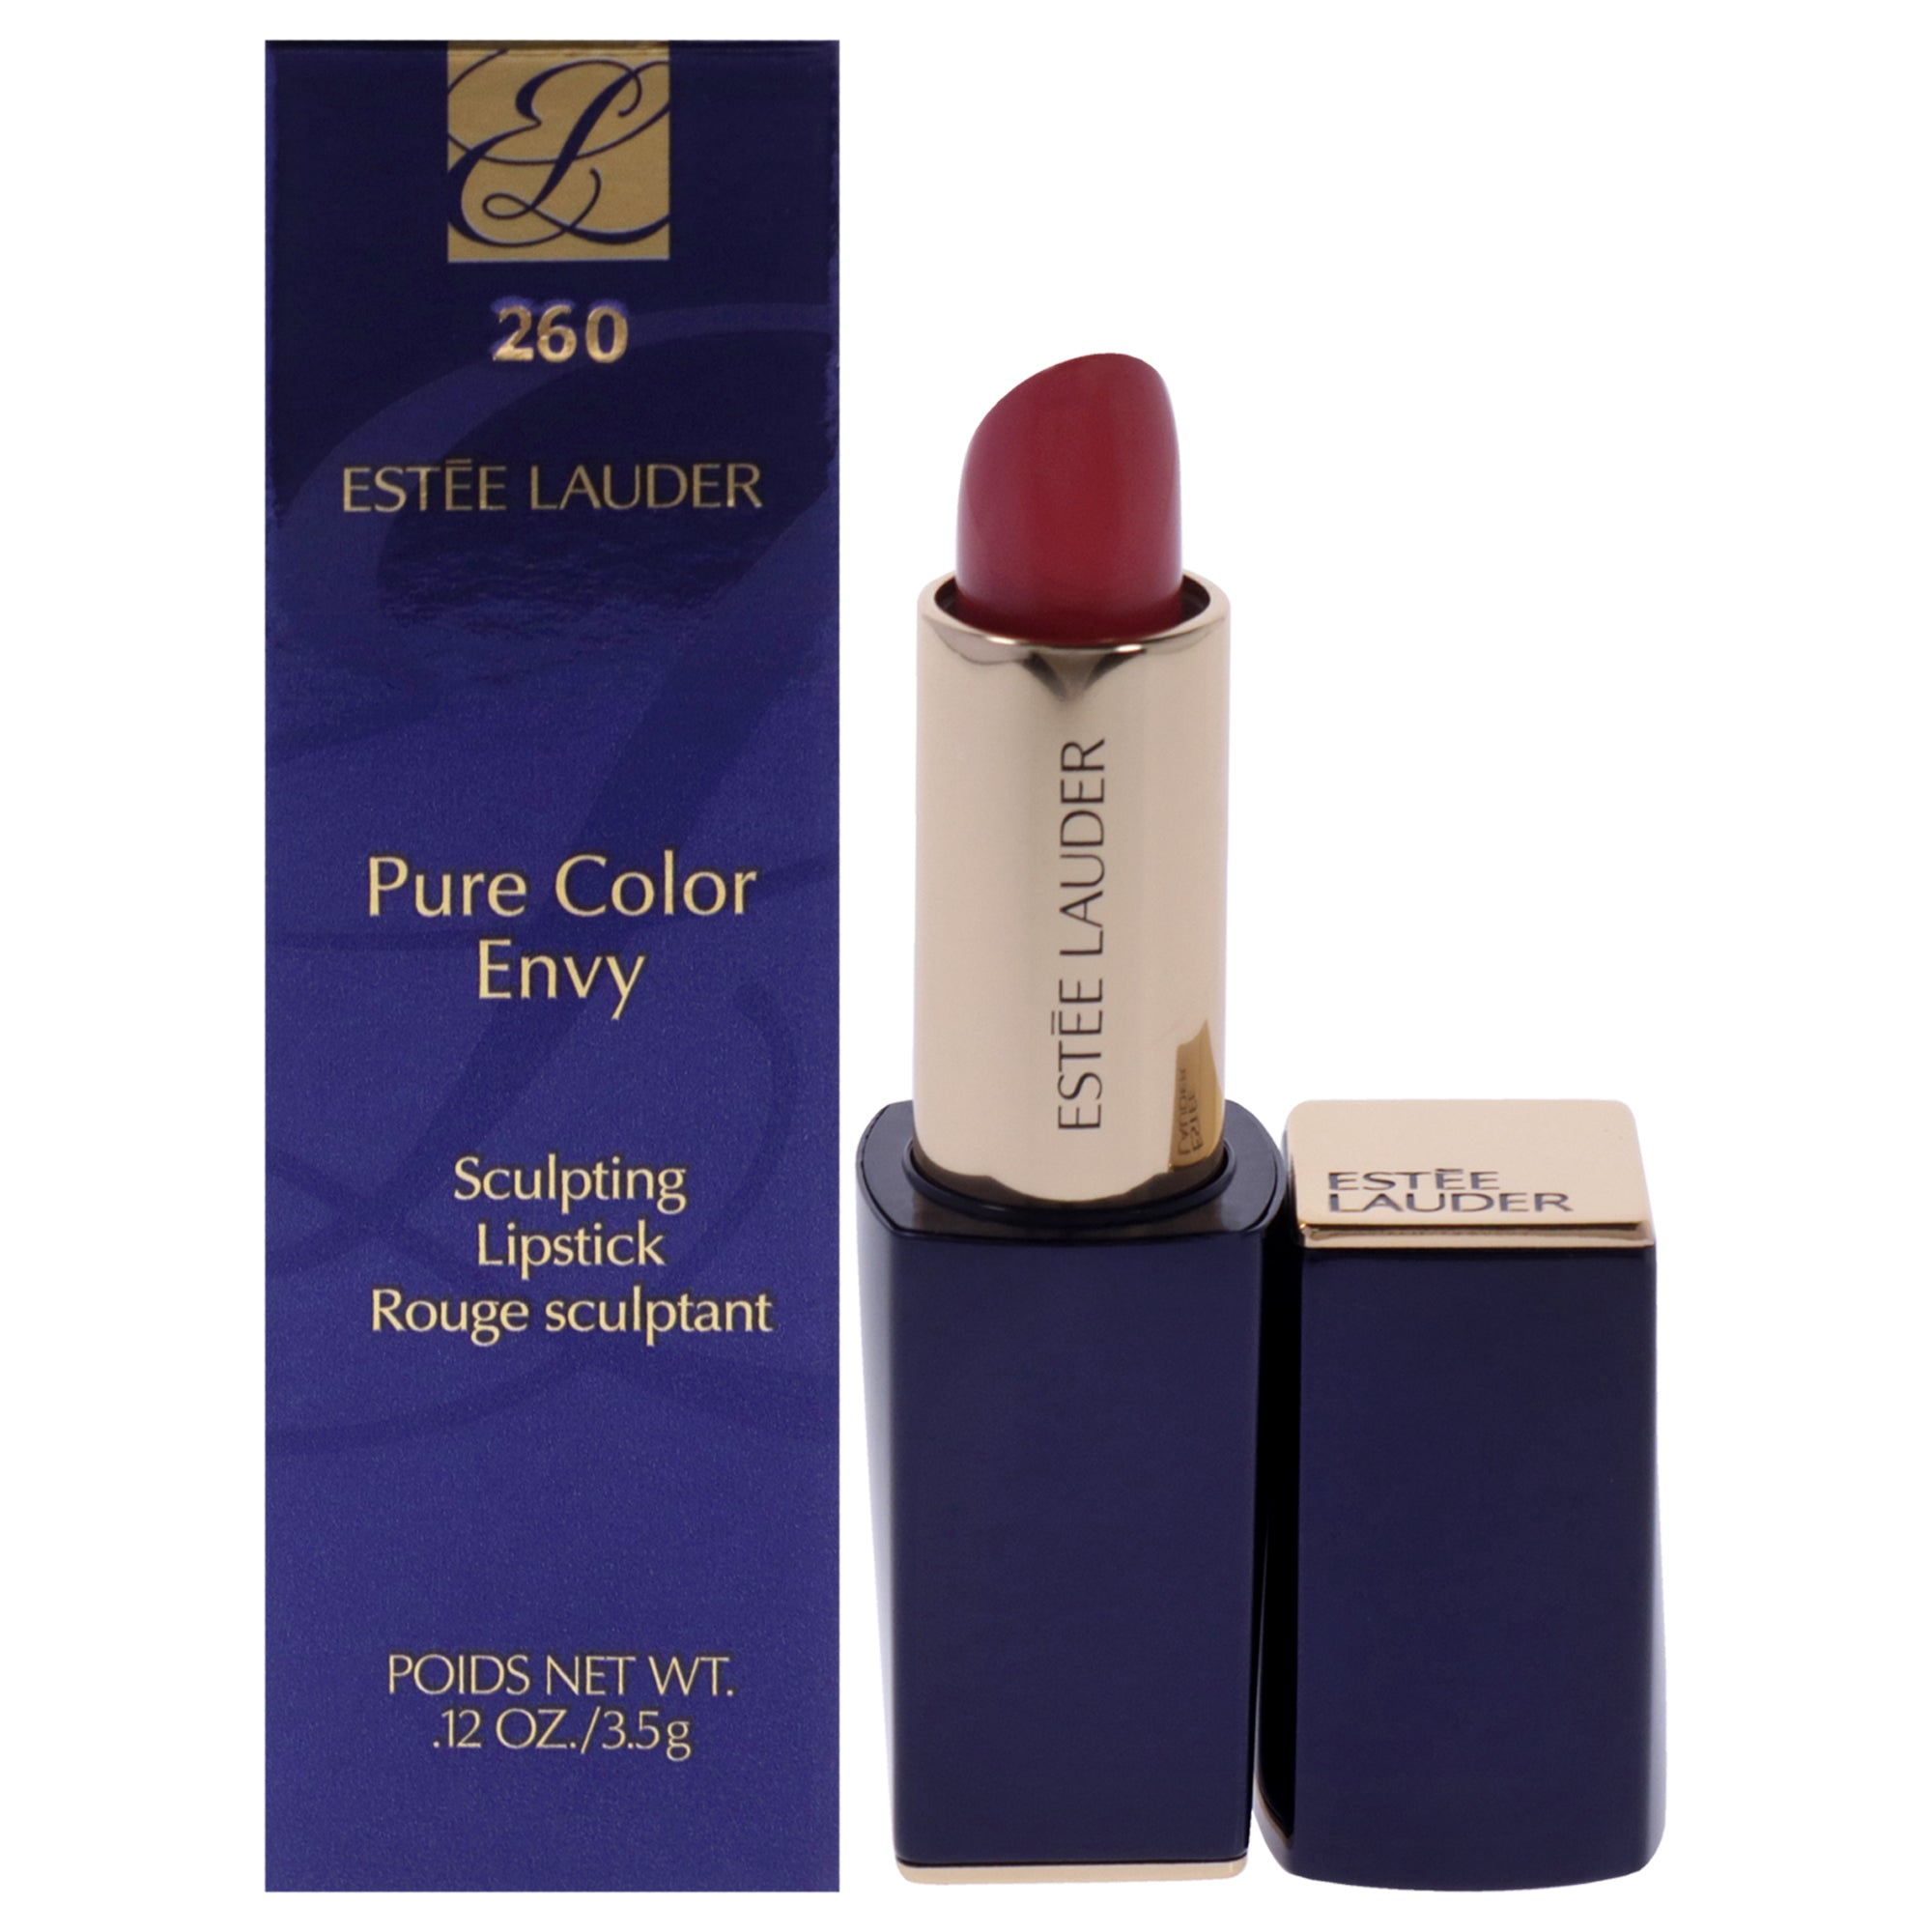 Pure Color Envy Sculpting Lipstick - 260 Eccentric by Estee Lauder for Women - 0.12 oz Lipstick